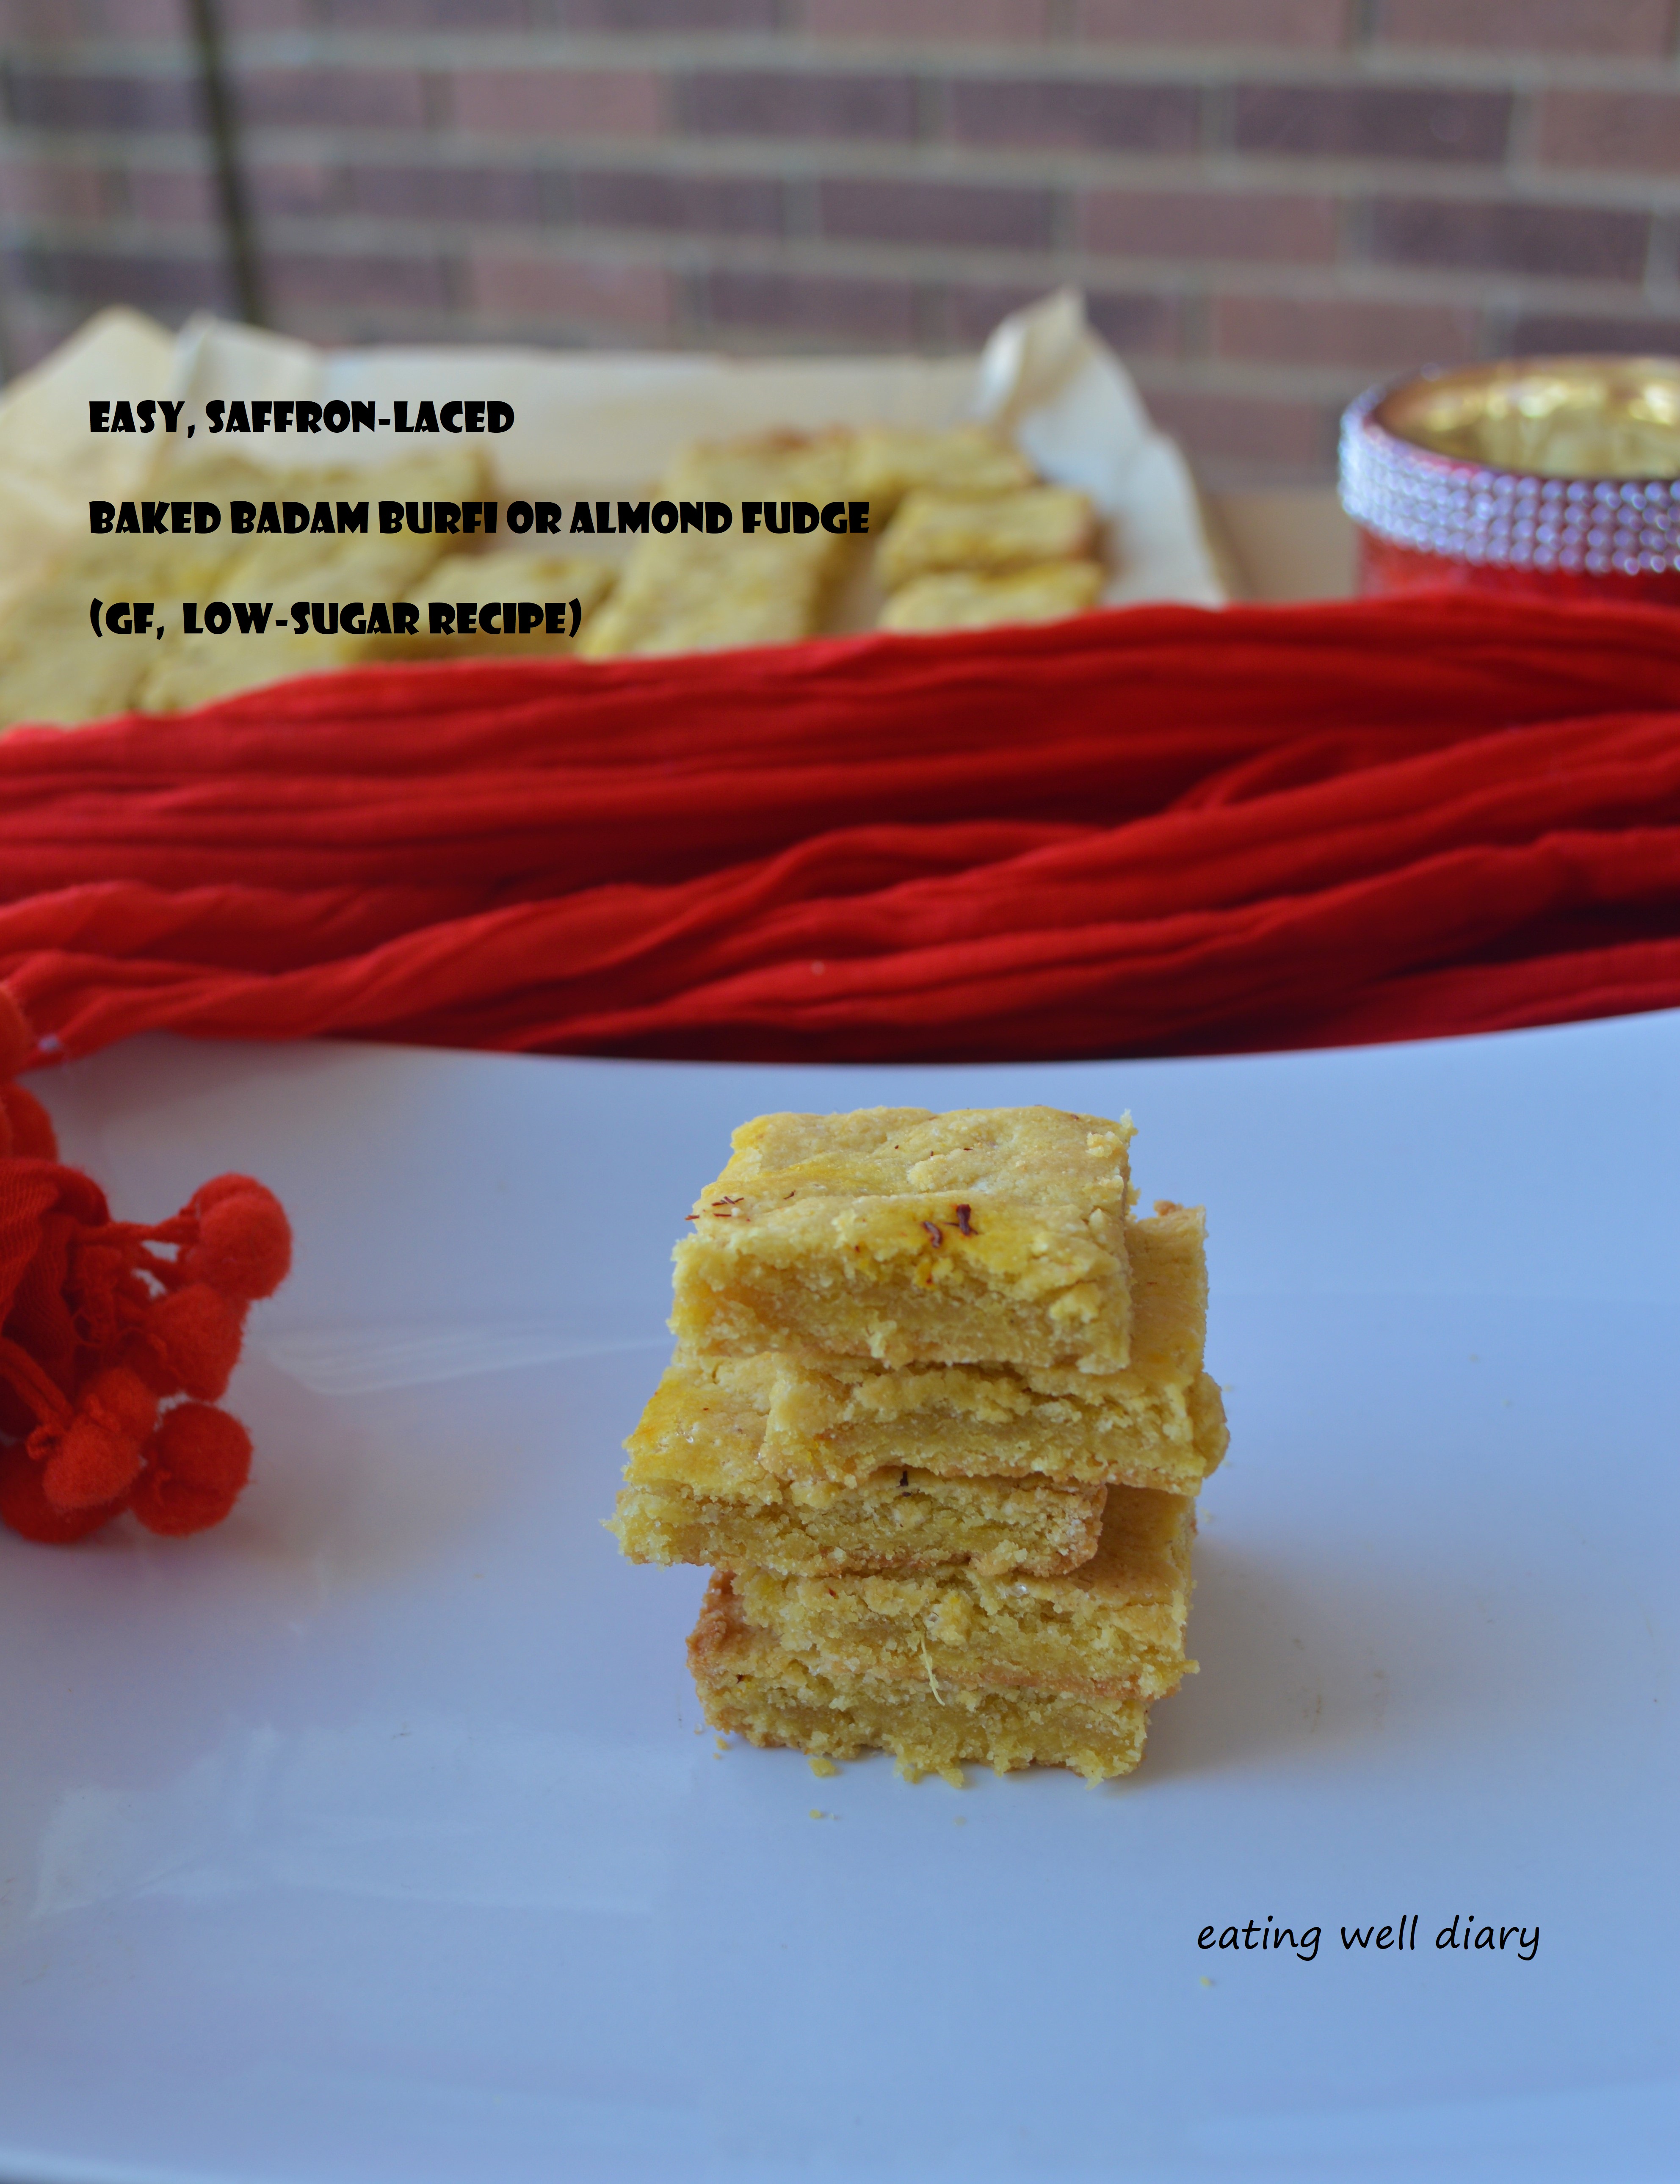 Easy Saffron-laced Baked Badam Burfi or Almond Fudge (gluten-free, vegan, low-sugar)